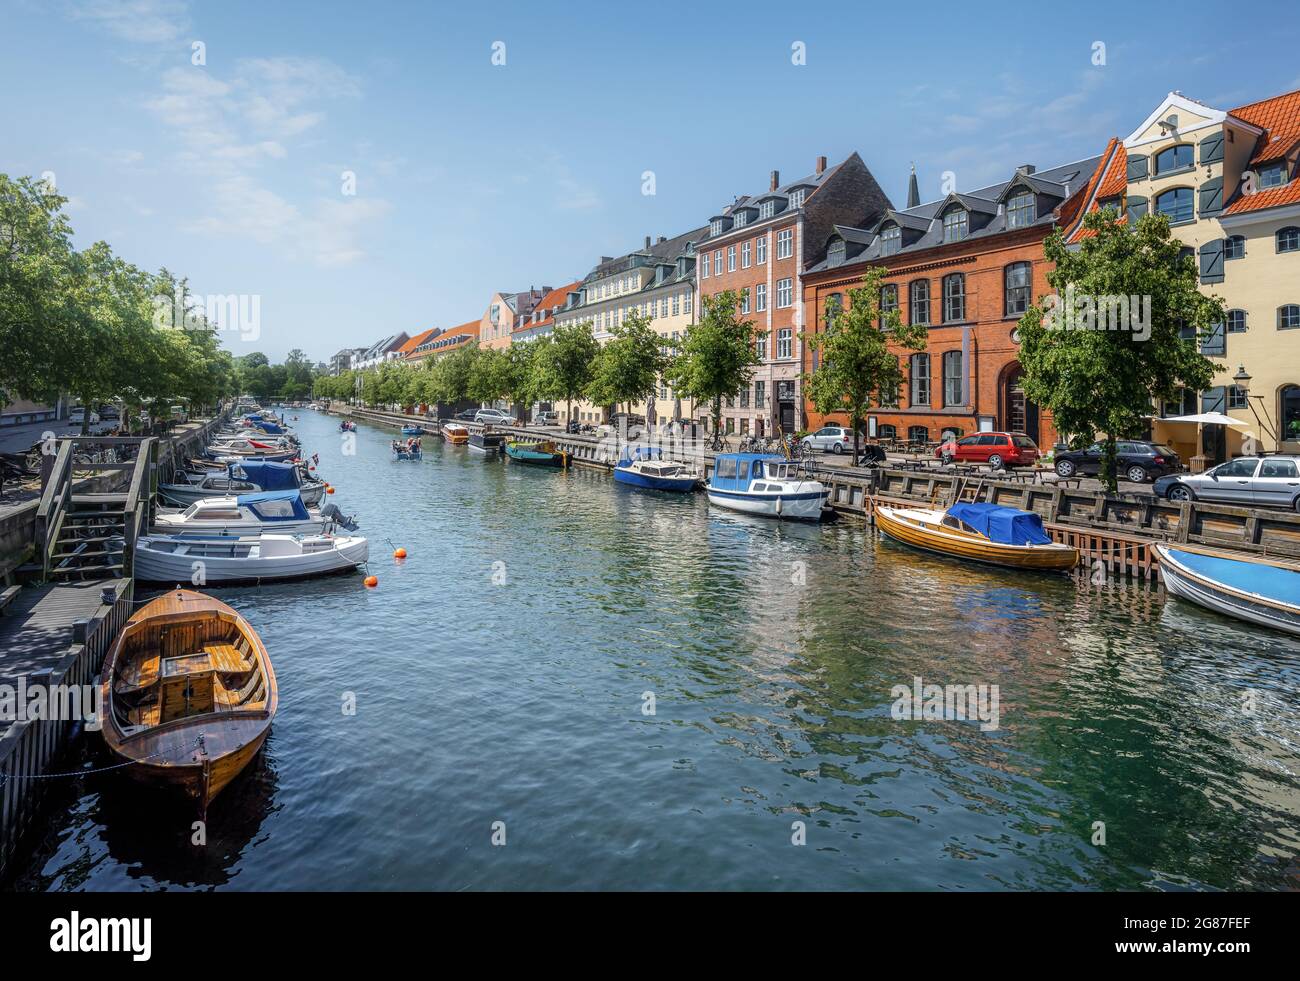 Canal and boats in Christianshavn - Copenhagen, Denmark Stock Photo